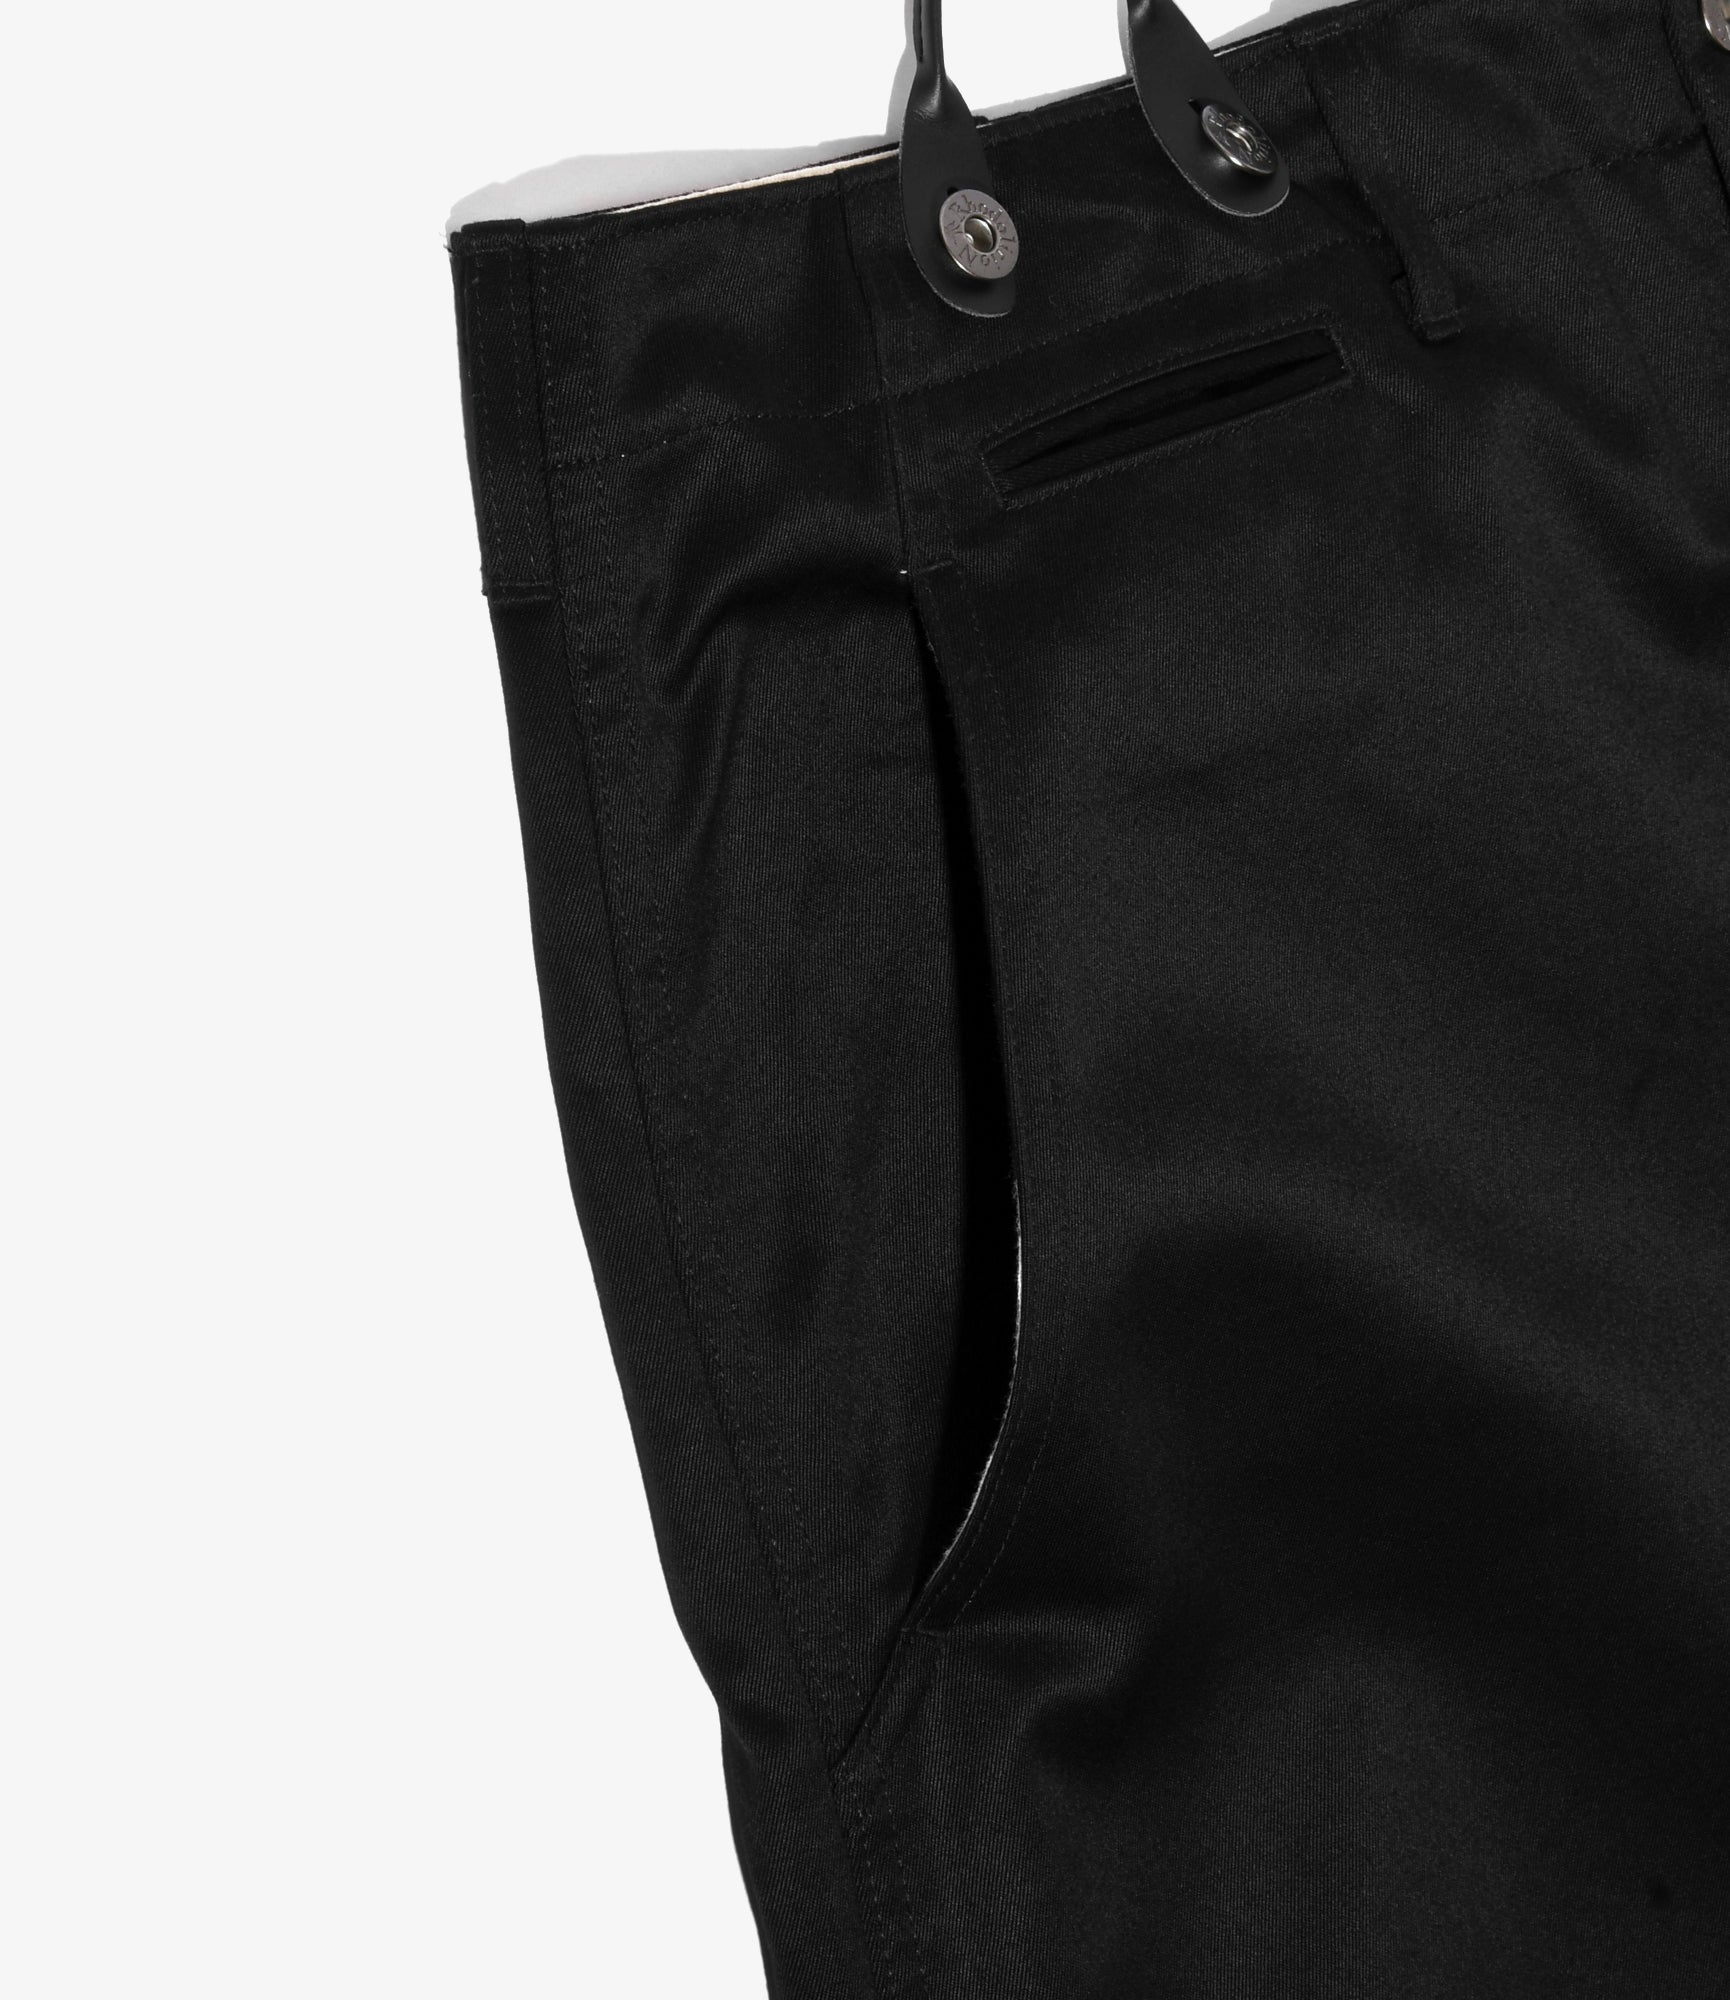 Army Chinos Suspenders Pant - Black